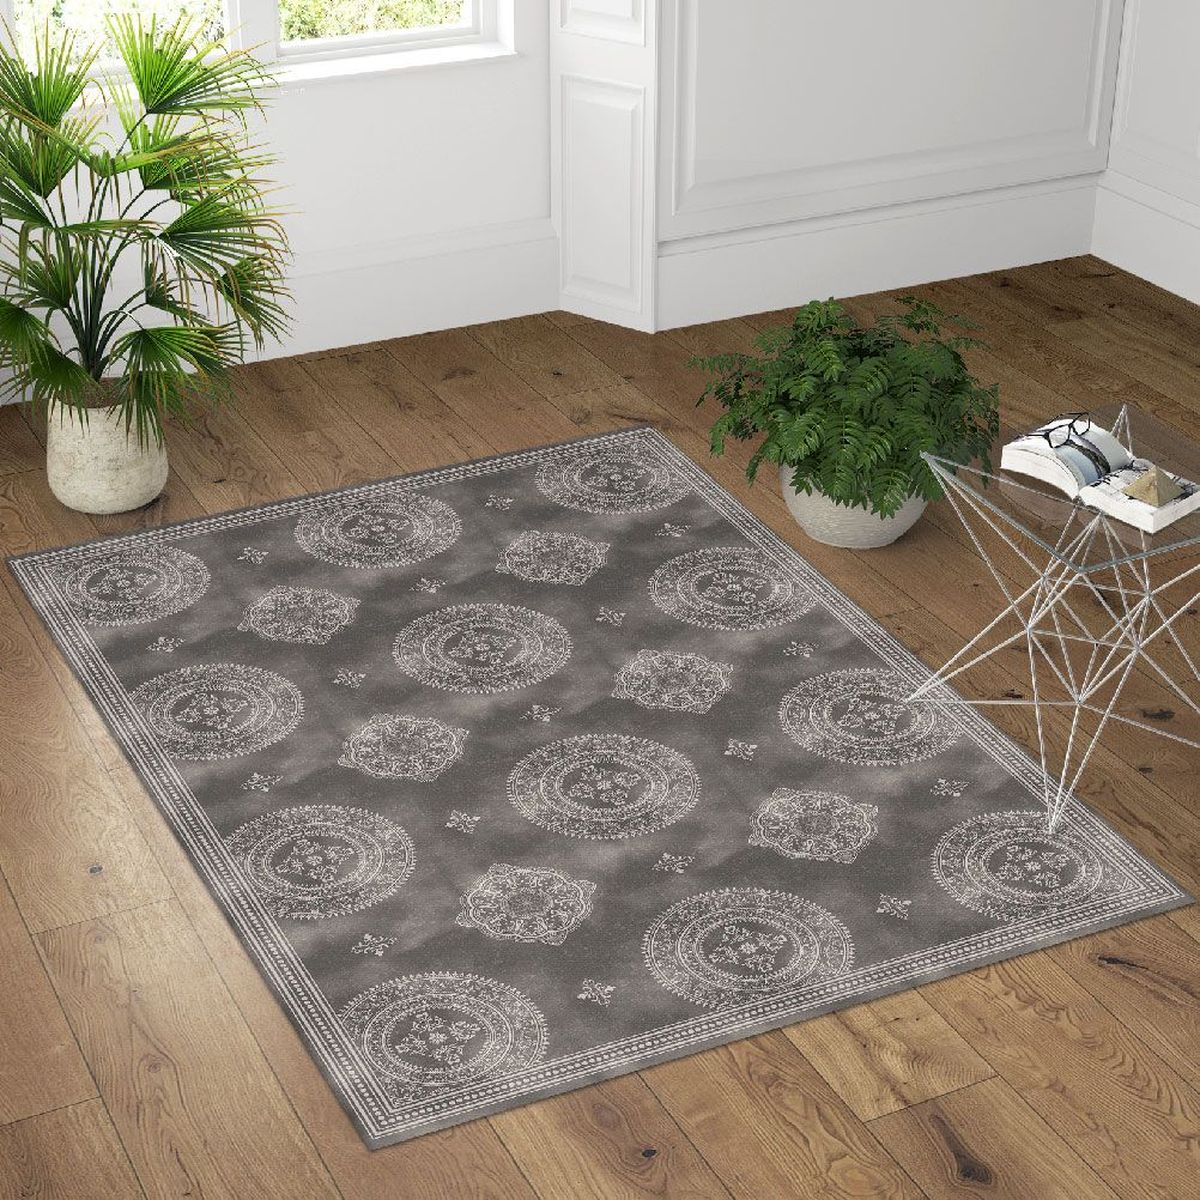 Provencal arabesques carpet 130 x 180 cm